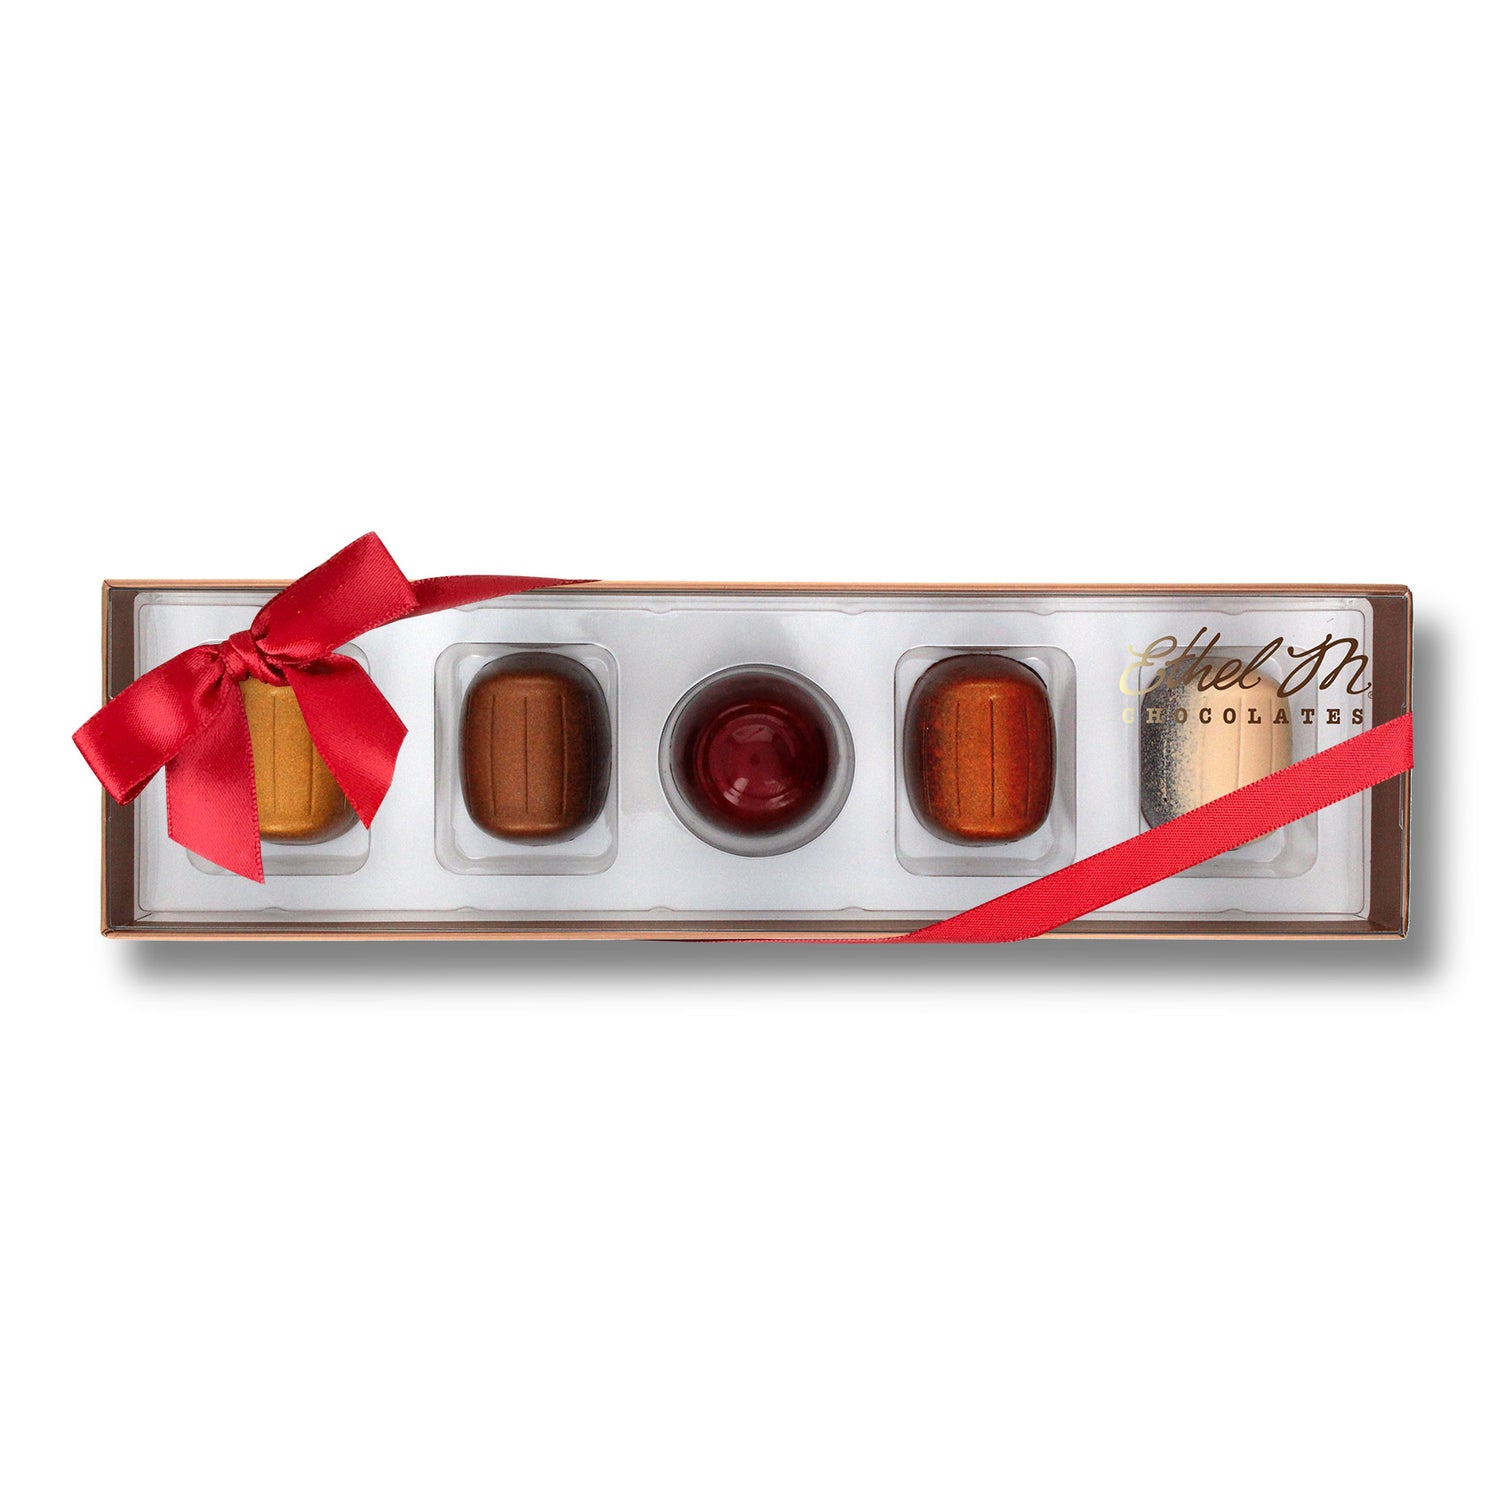 Ethel M Chocolates Liqueurs Sampler, 5 Piece Premium Chocolate Collection